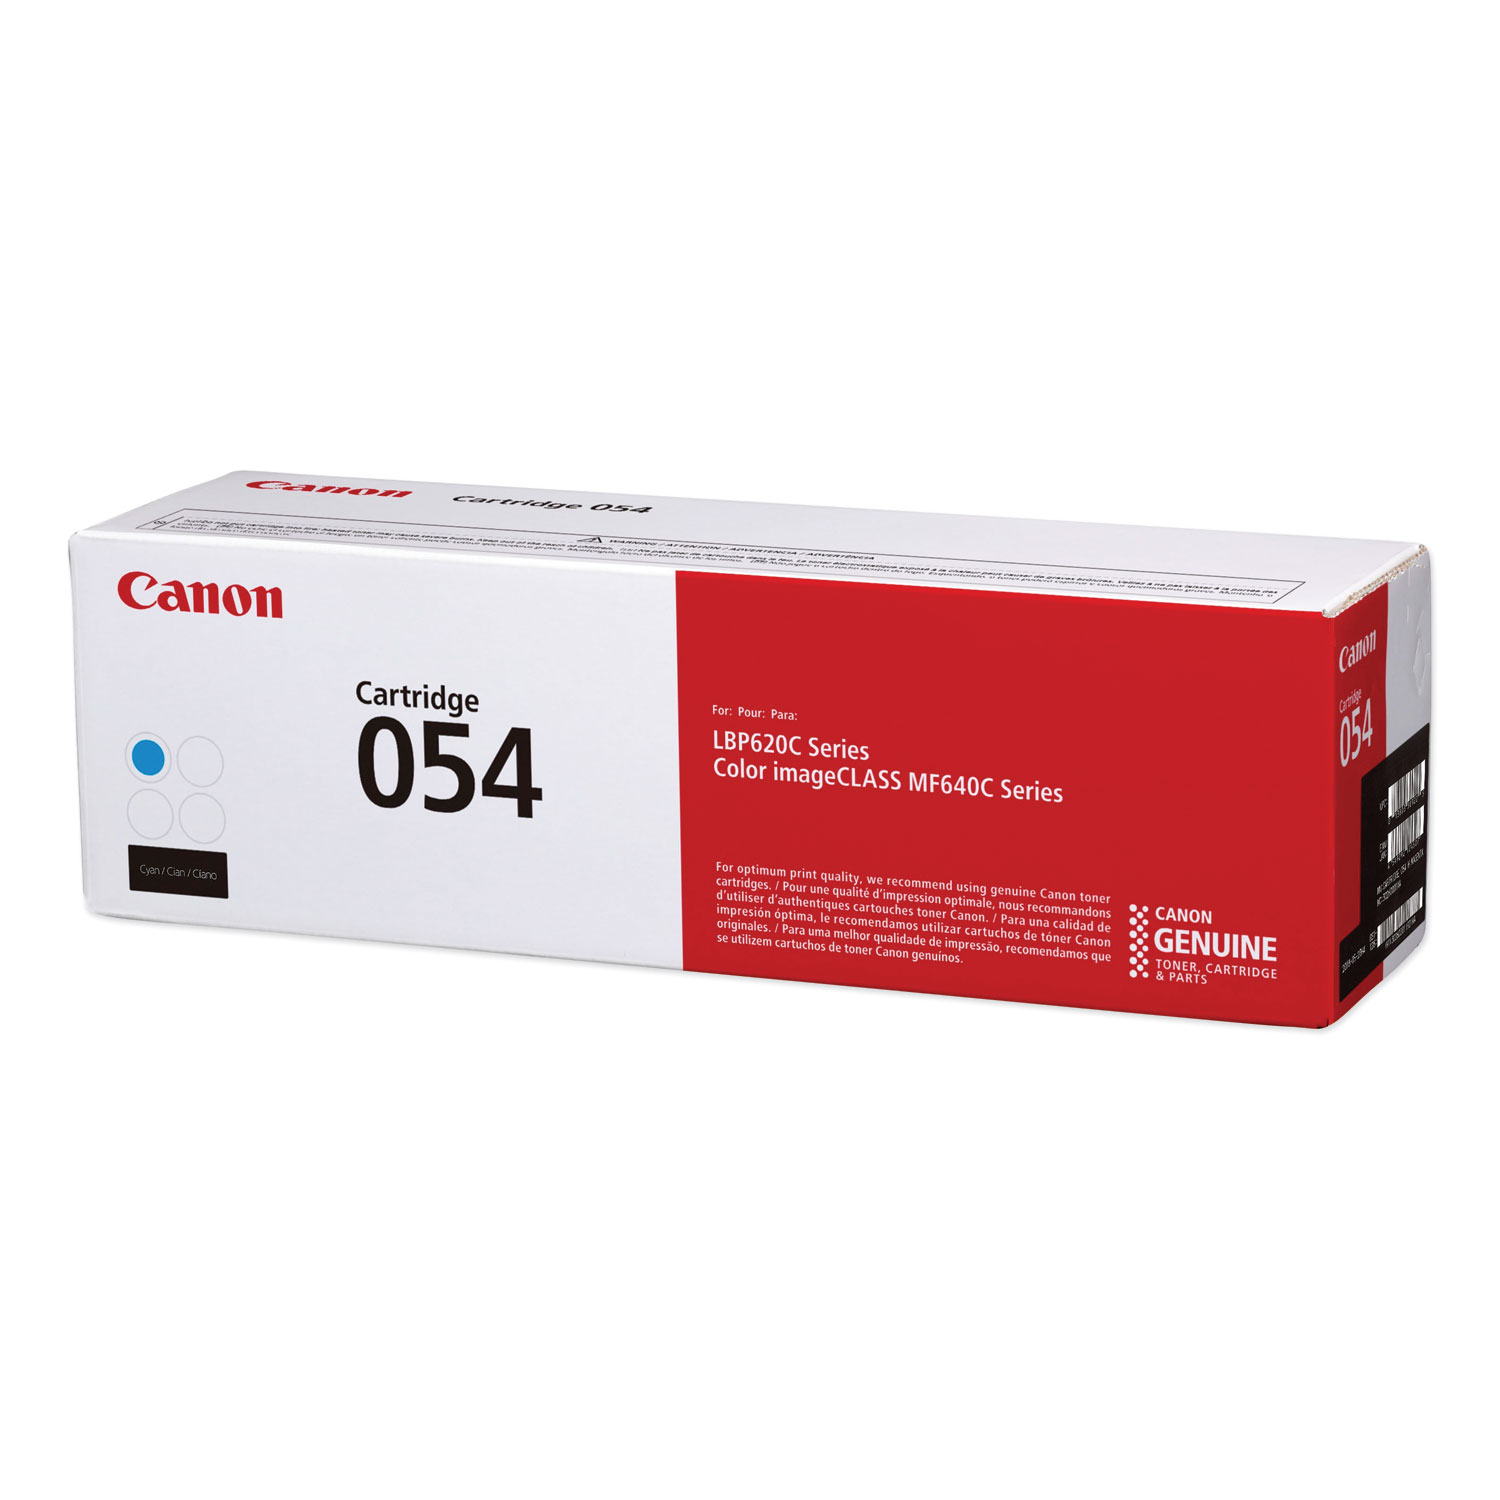  Canon 3023C001 3023C001 (054) Toner, 1,200 Page-Yield, Cyan (CNM3023C001) 